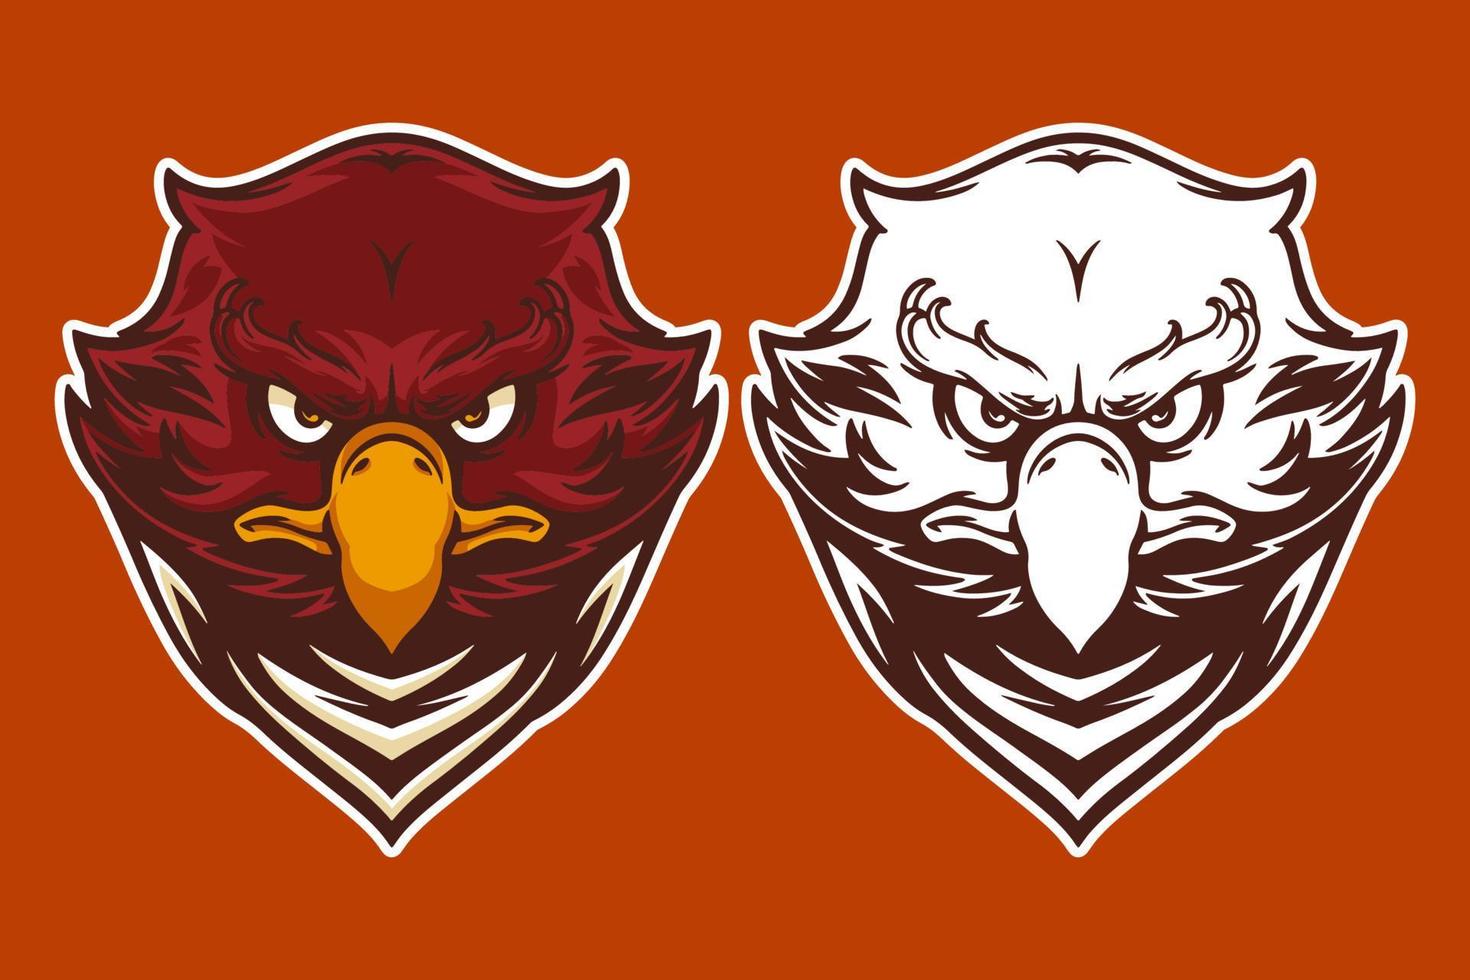 eagle head mascot vector illustration cartoon style